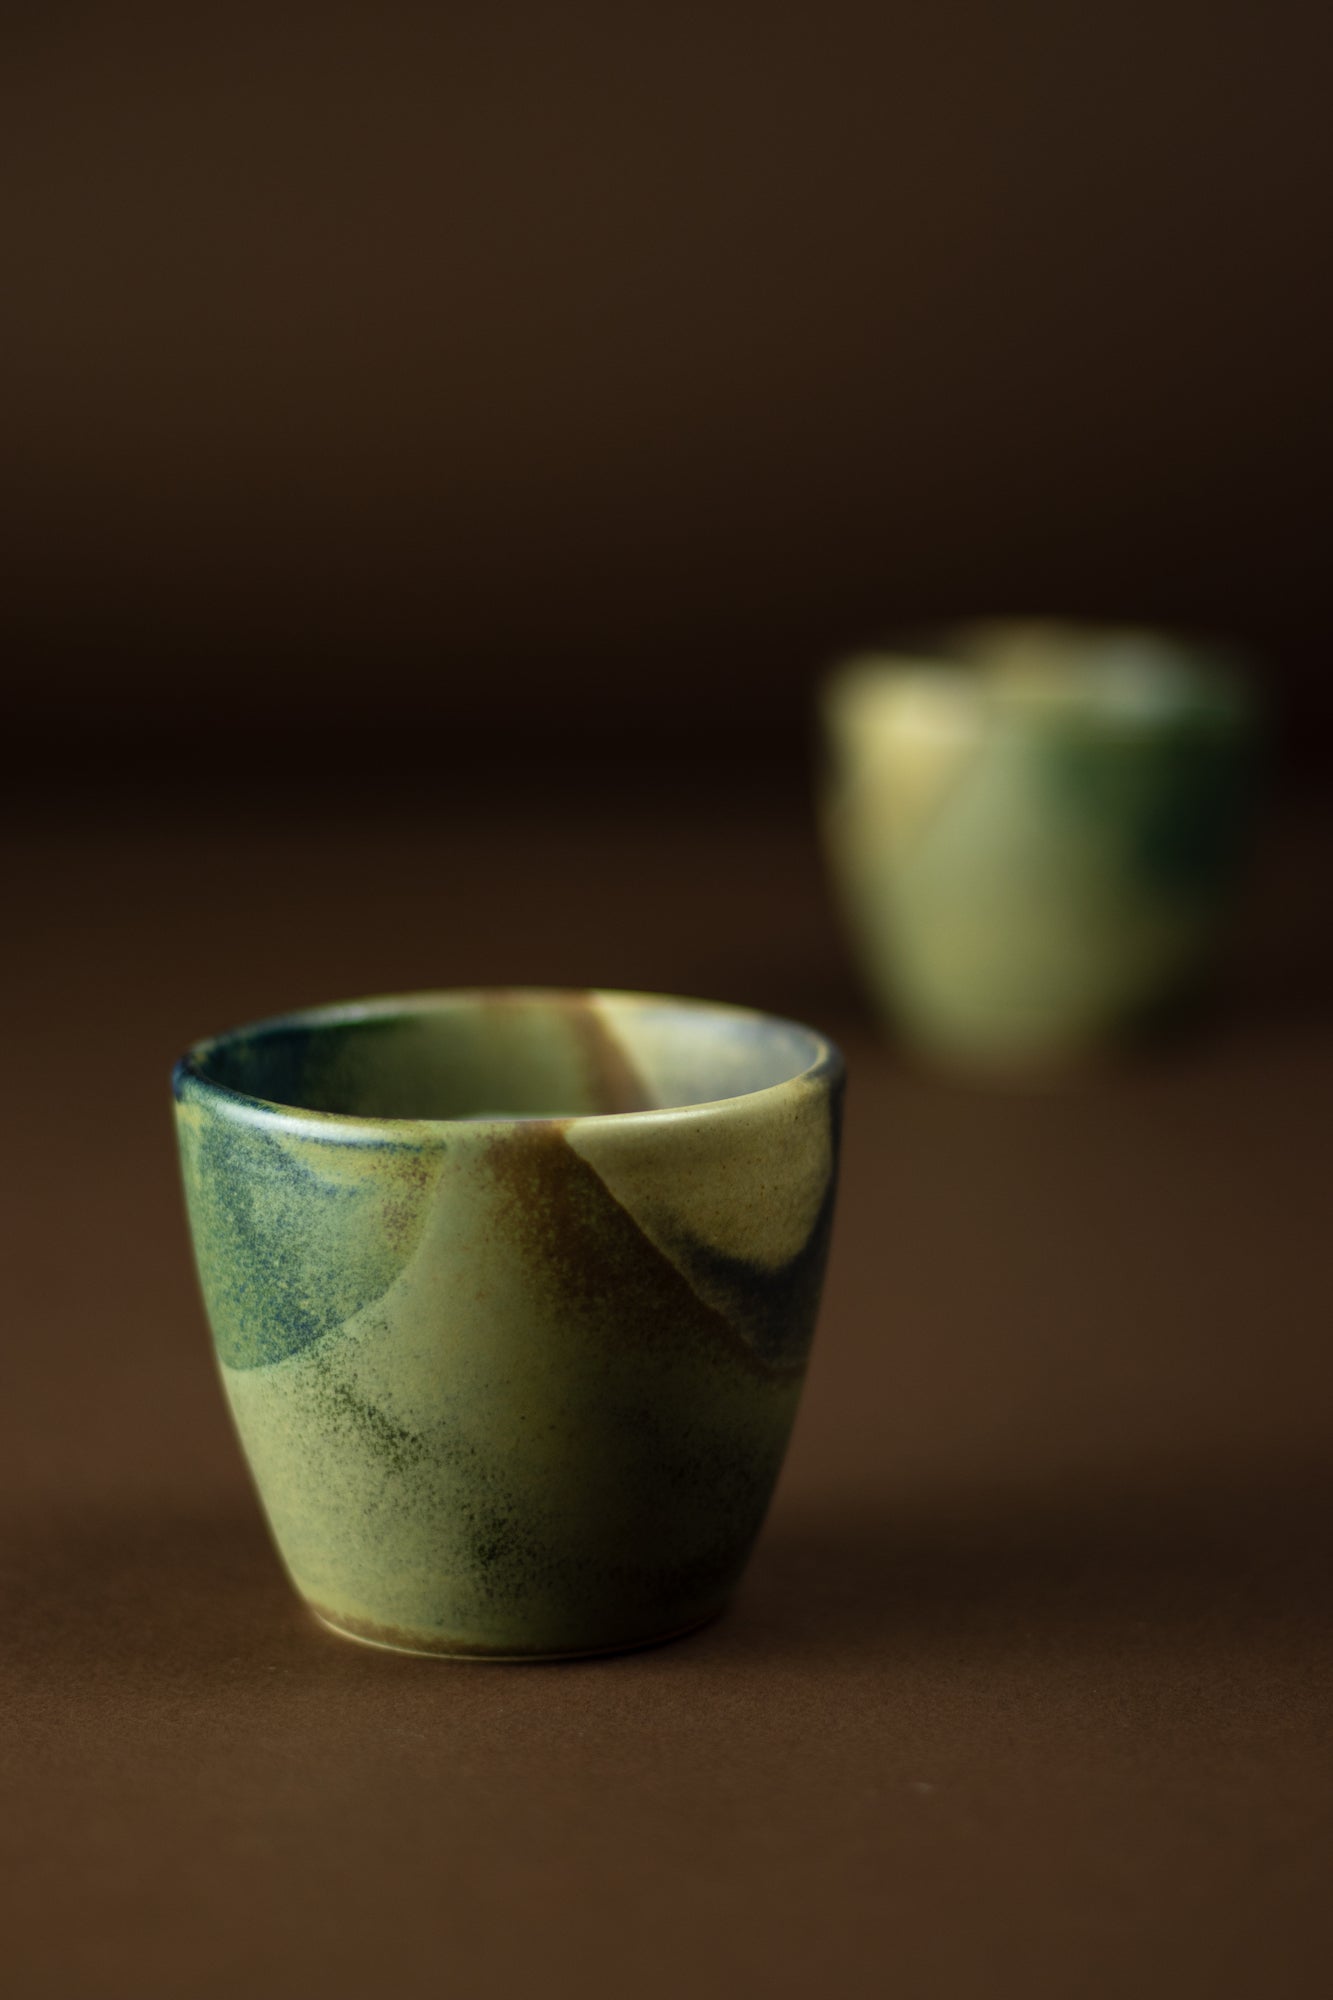 S Handmade ceramic cup